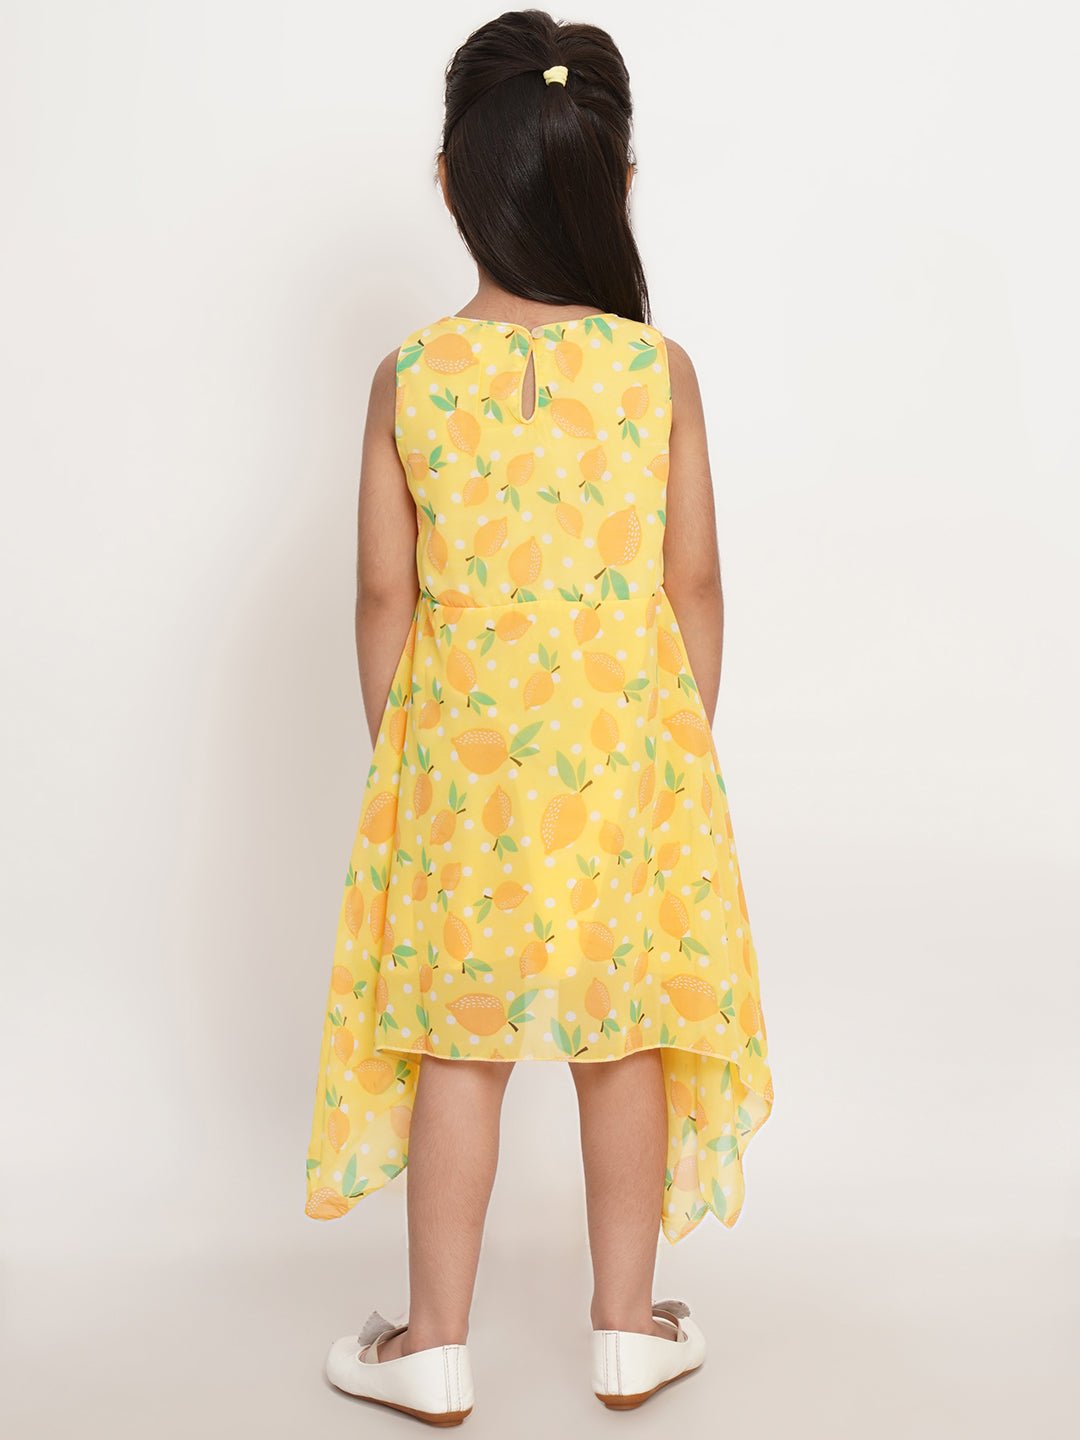 CREATIVE KID'S Girl Yellow & Green Lemon Print High & Low Dress